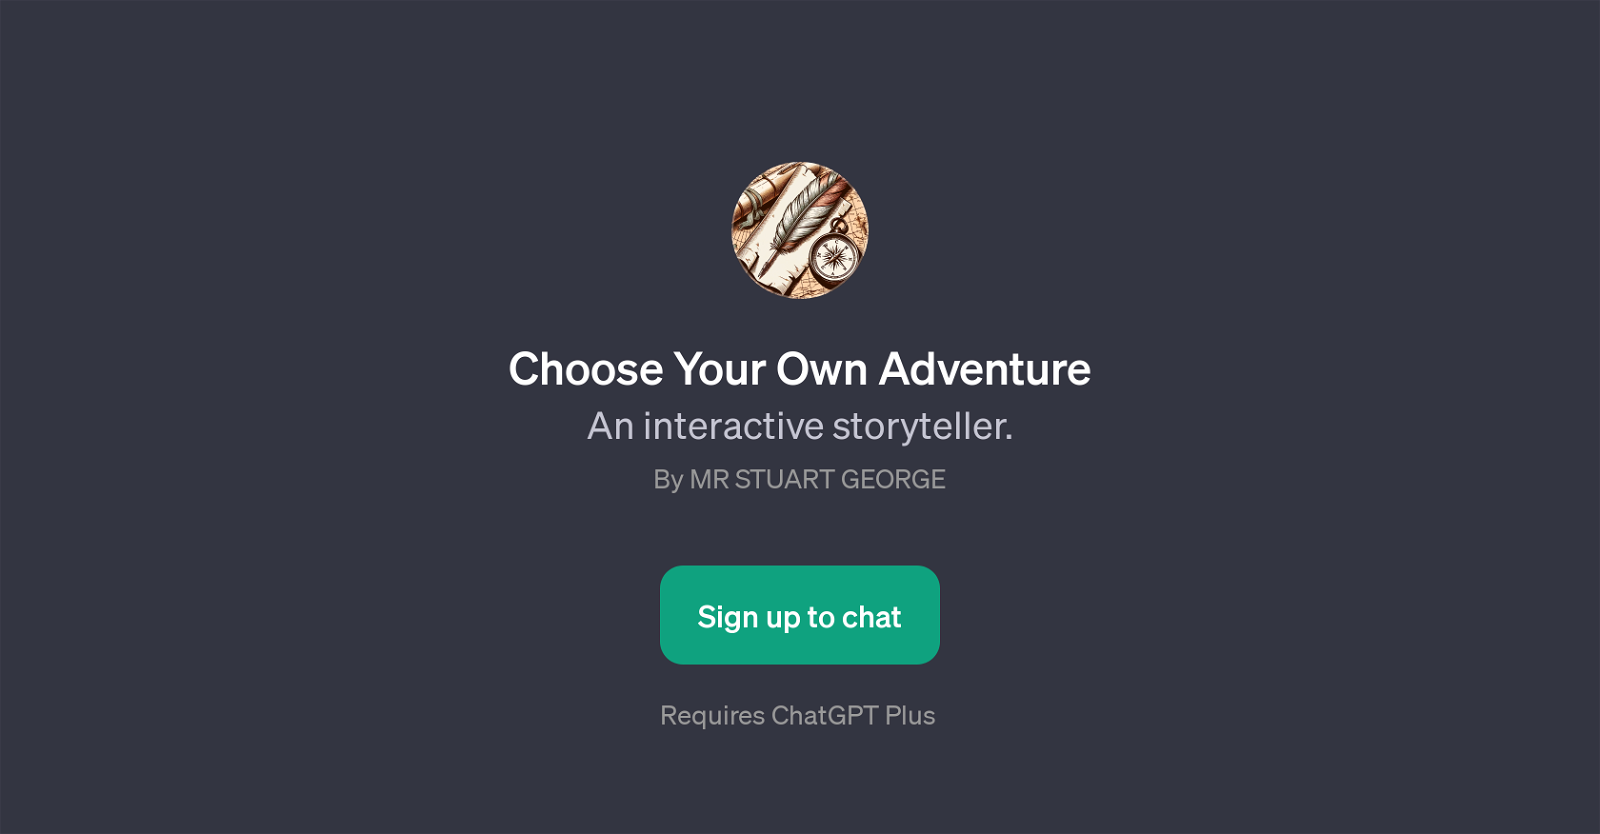 Choose Your Own Adventure website